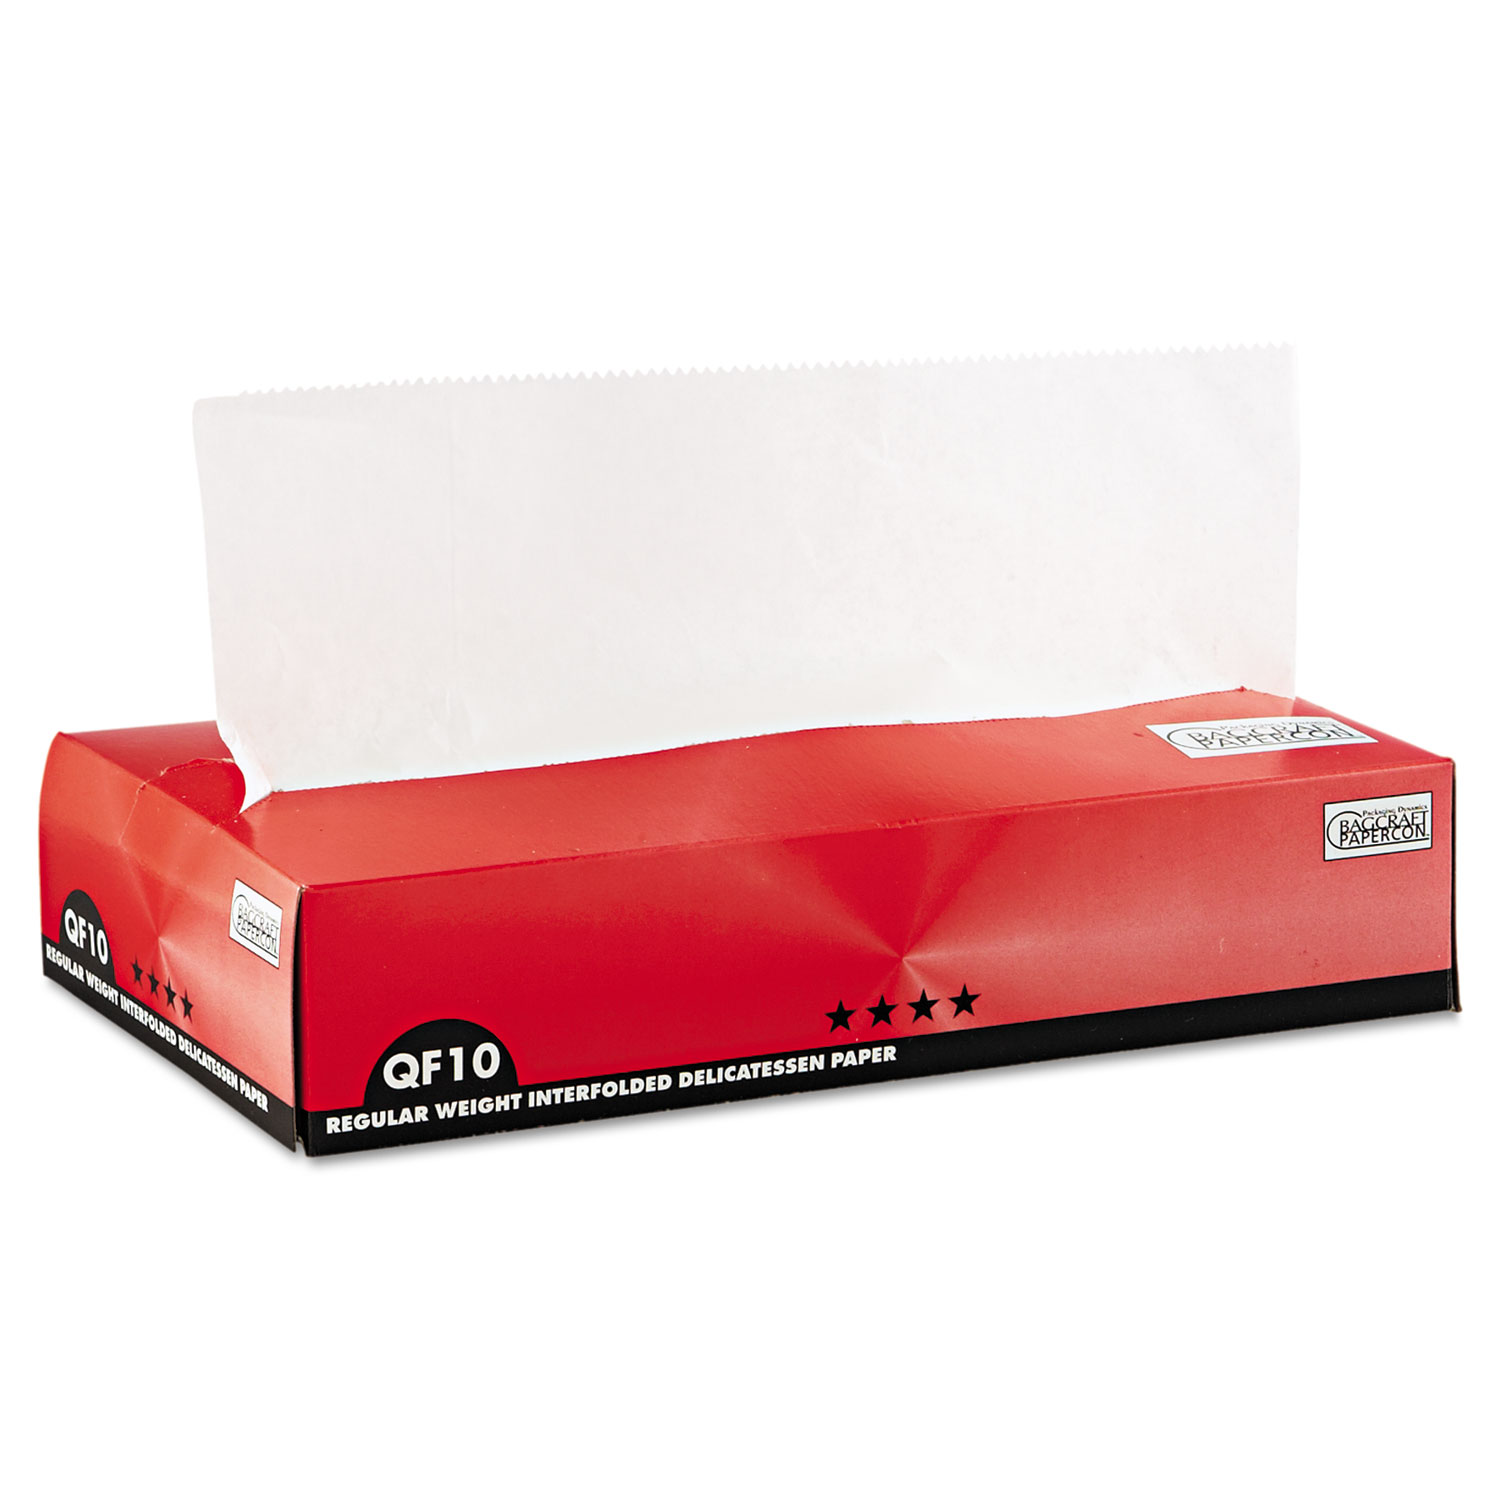  Bagcraft P011010 QF10 Interfolded Dry Wax Paper, 10 x 10 1/4, White, 500/Box, 12 Boxes/Carton (BGC011010) 